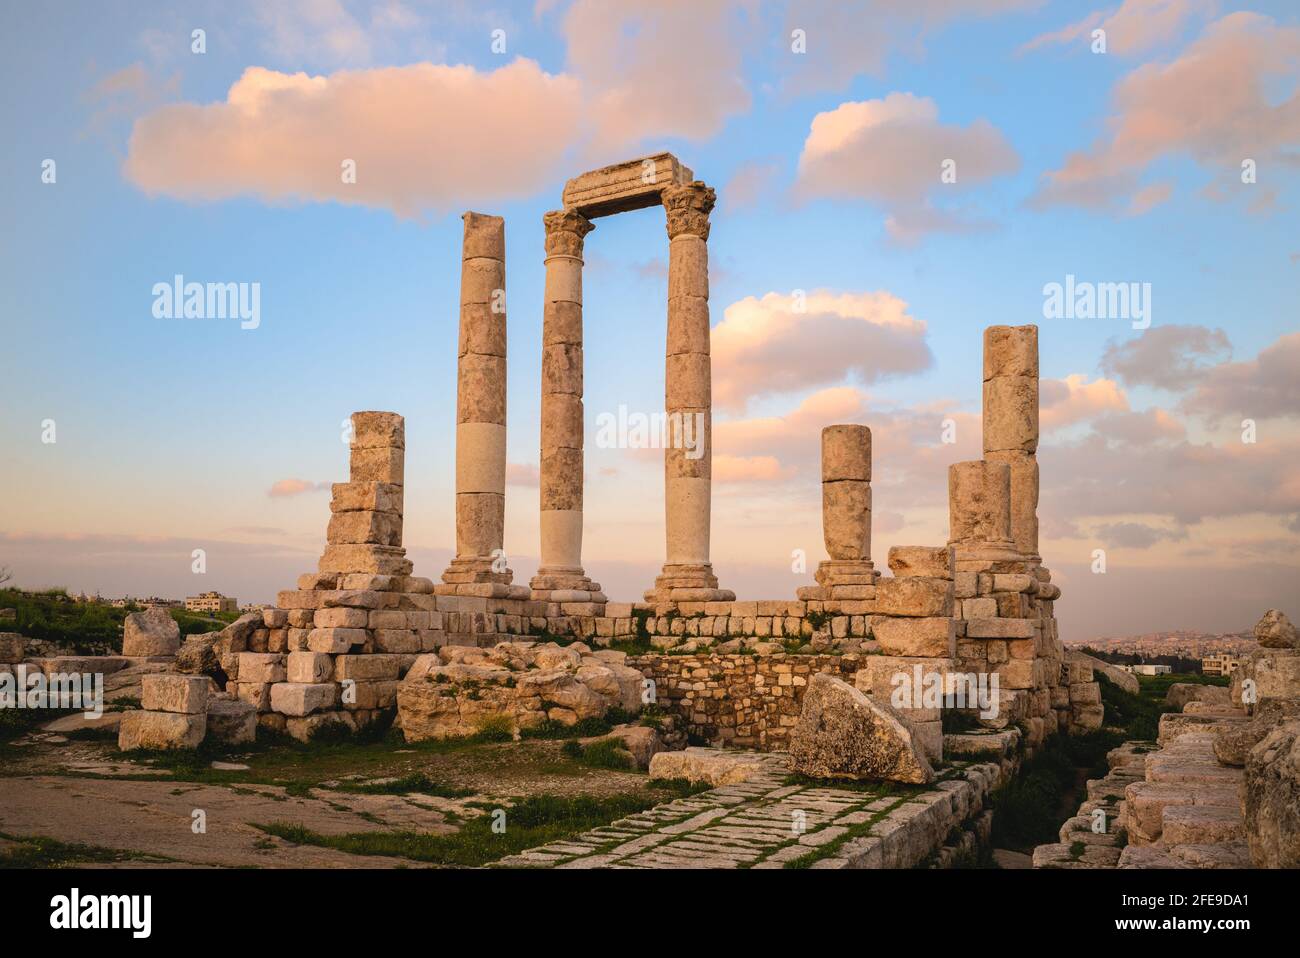 Temple Hercules located on Amman Citadel in Amman, Stock Photo - Alamy